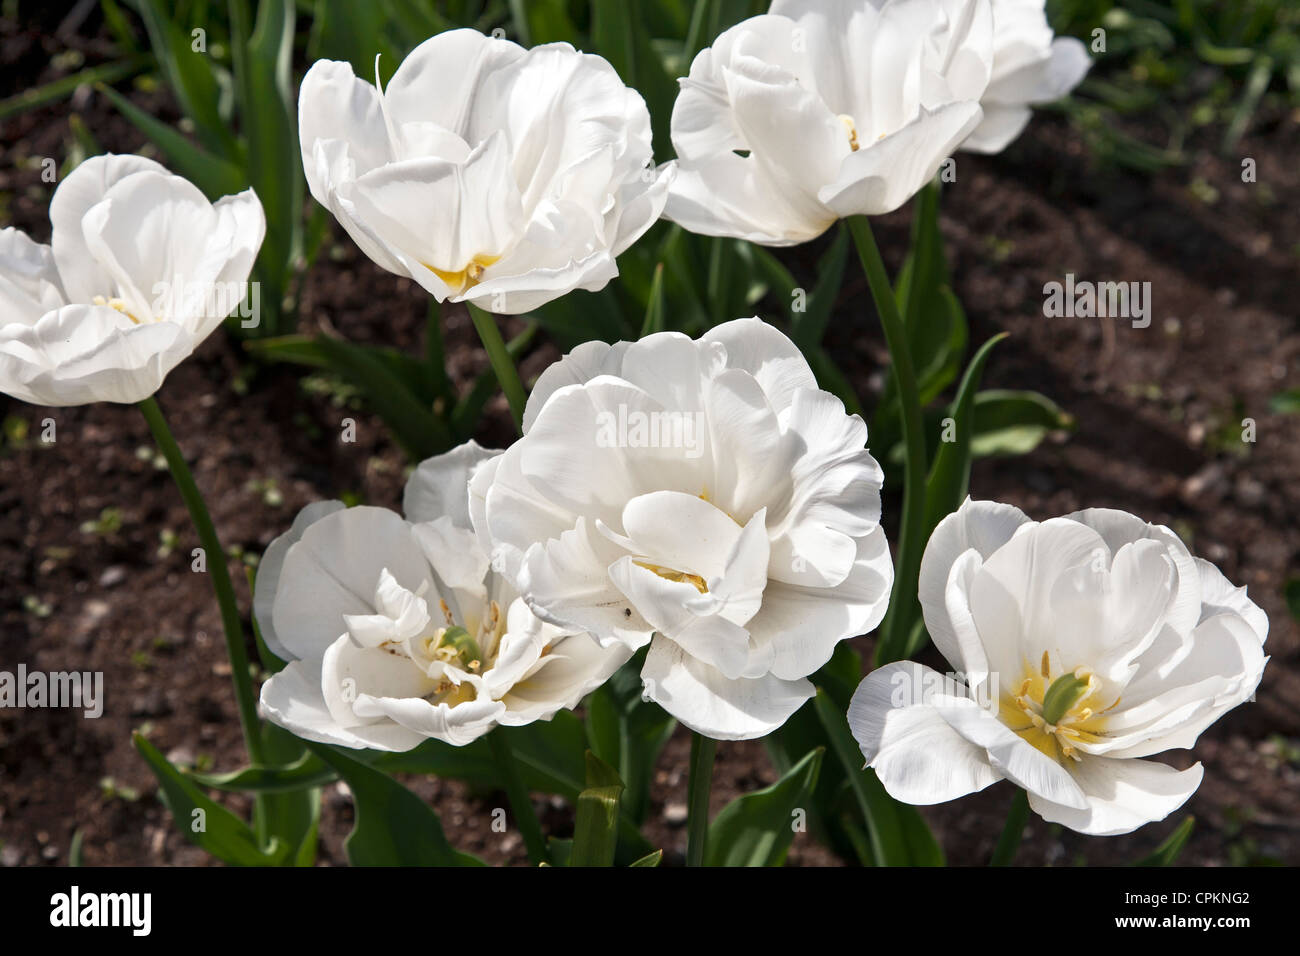 Lovely White Tulip Tulips Bloom Against Green Leaves Brown Earth